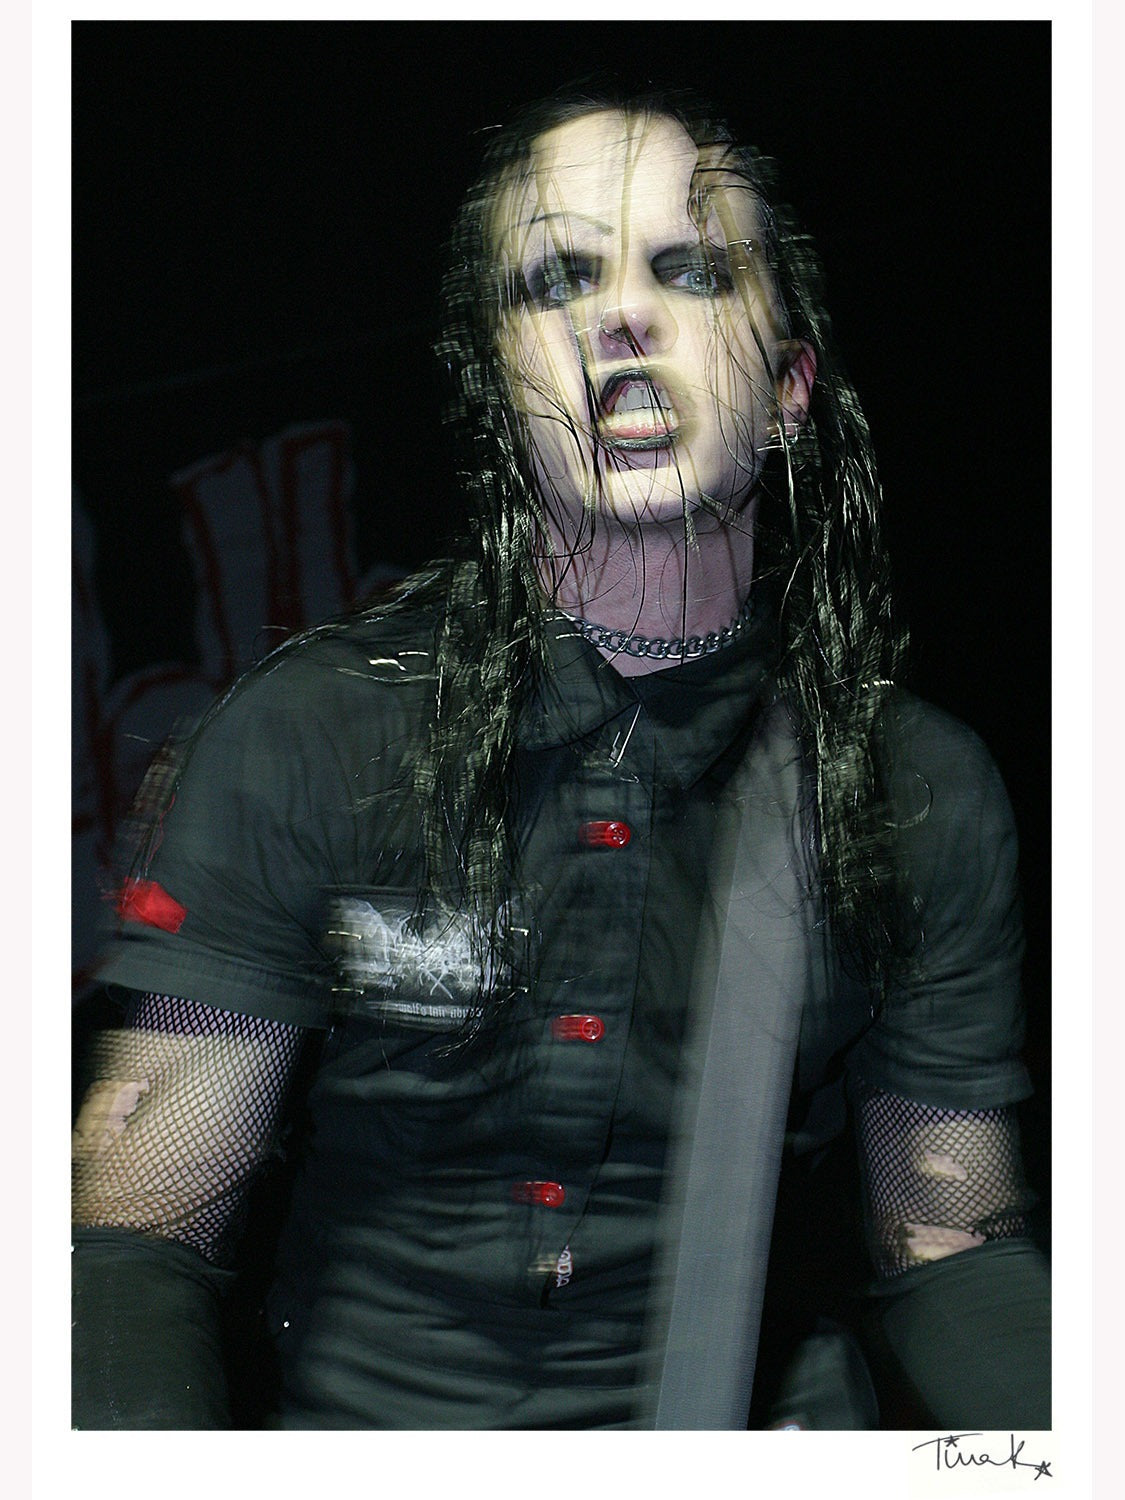 Joey Jordison (Murderdolls, Slipknot) on stage with Murderdolls, 2002. Motion blurred image & print by Tina K Photography.